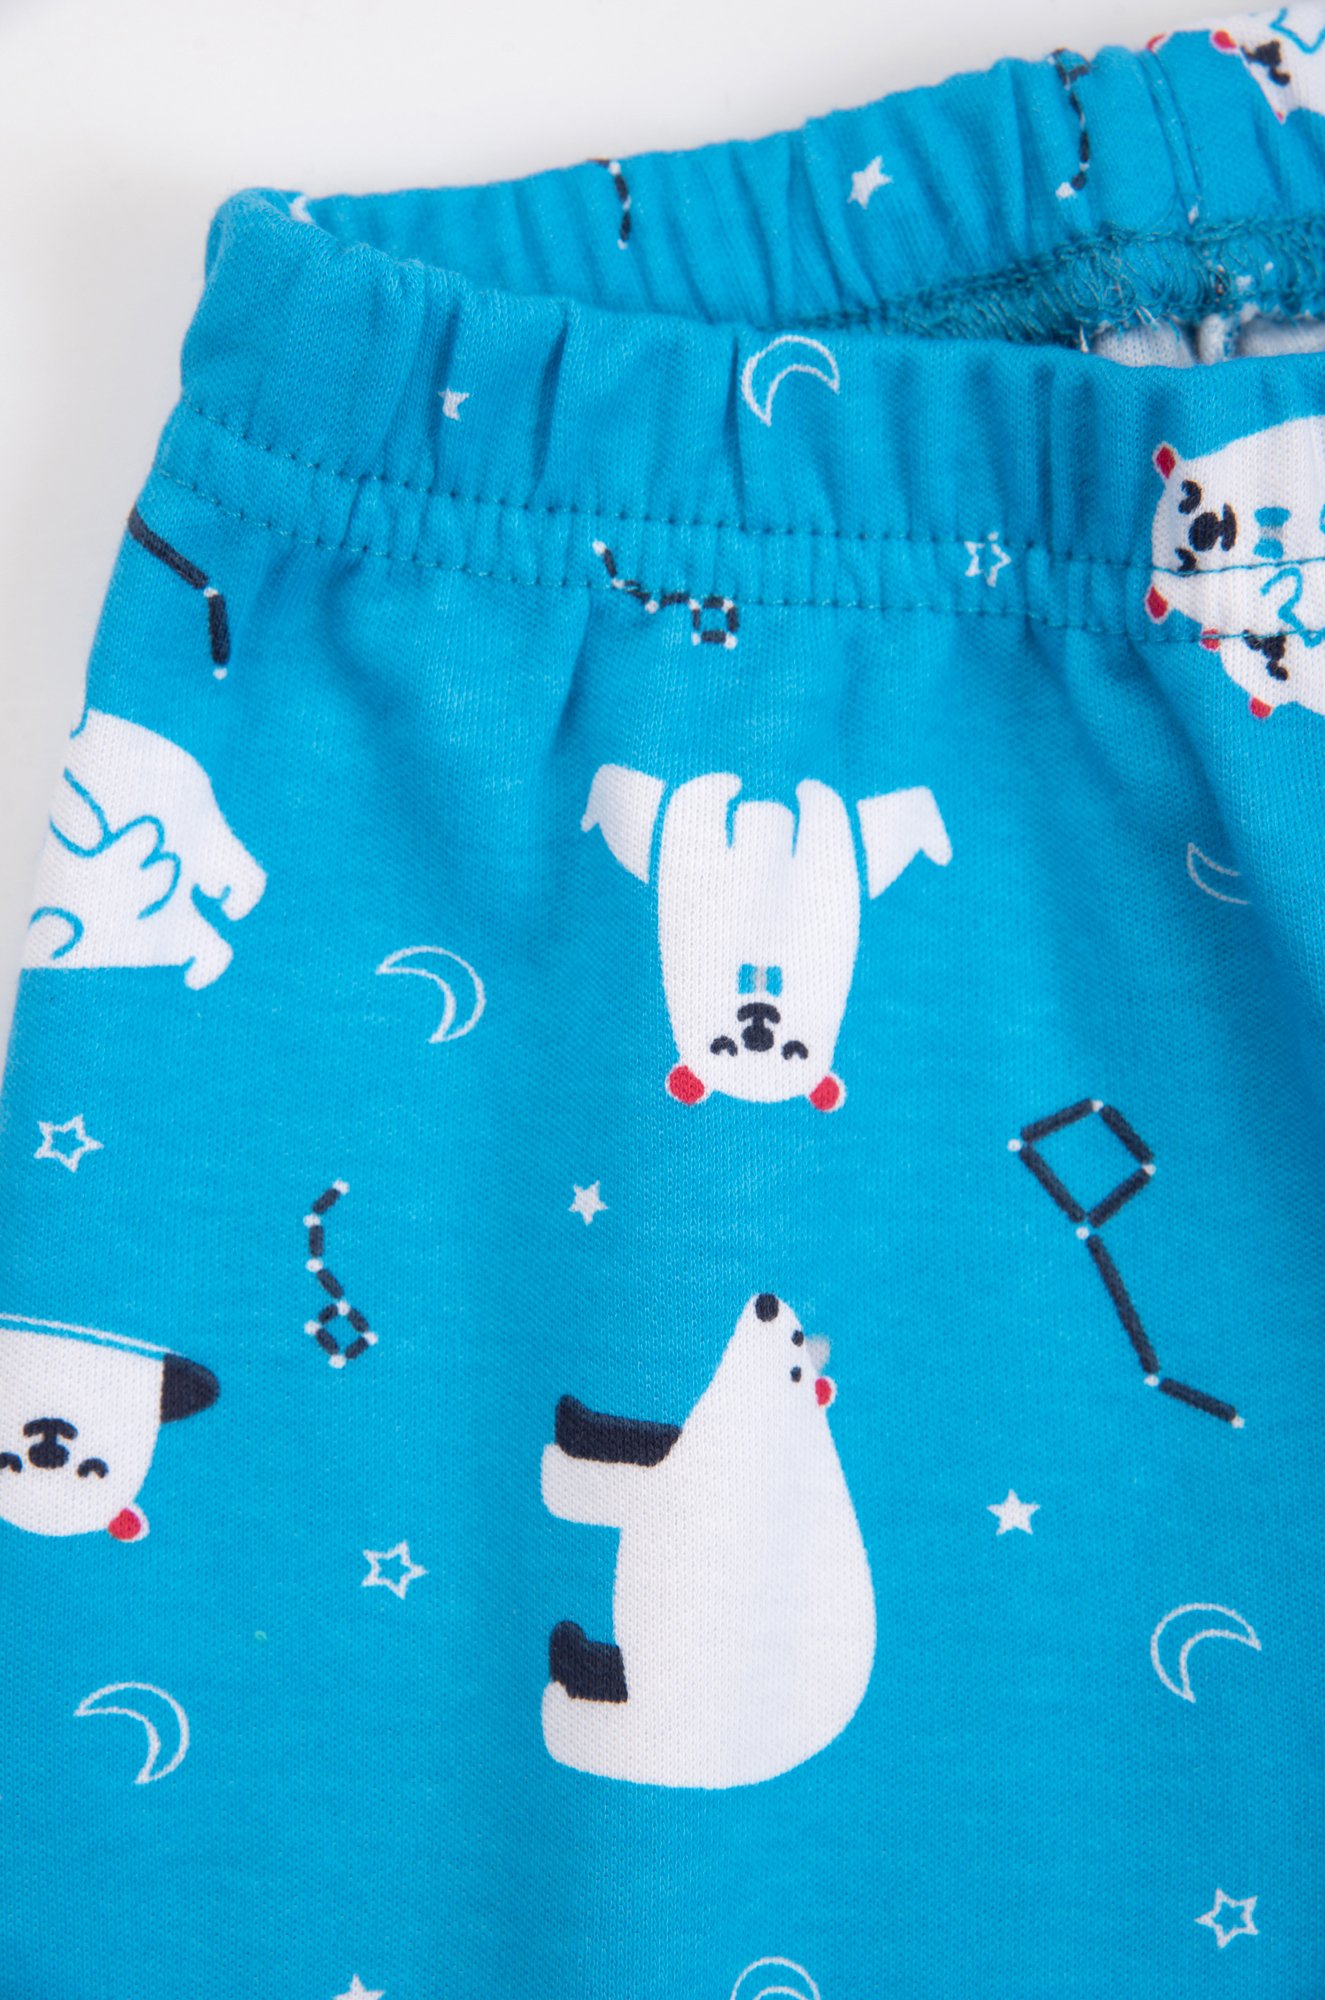 Пижама для мальчика LE&LO